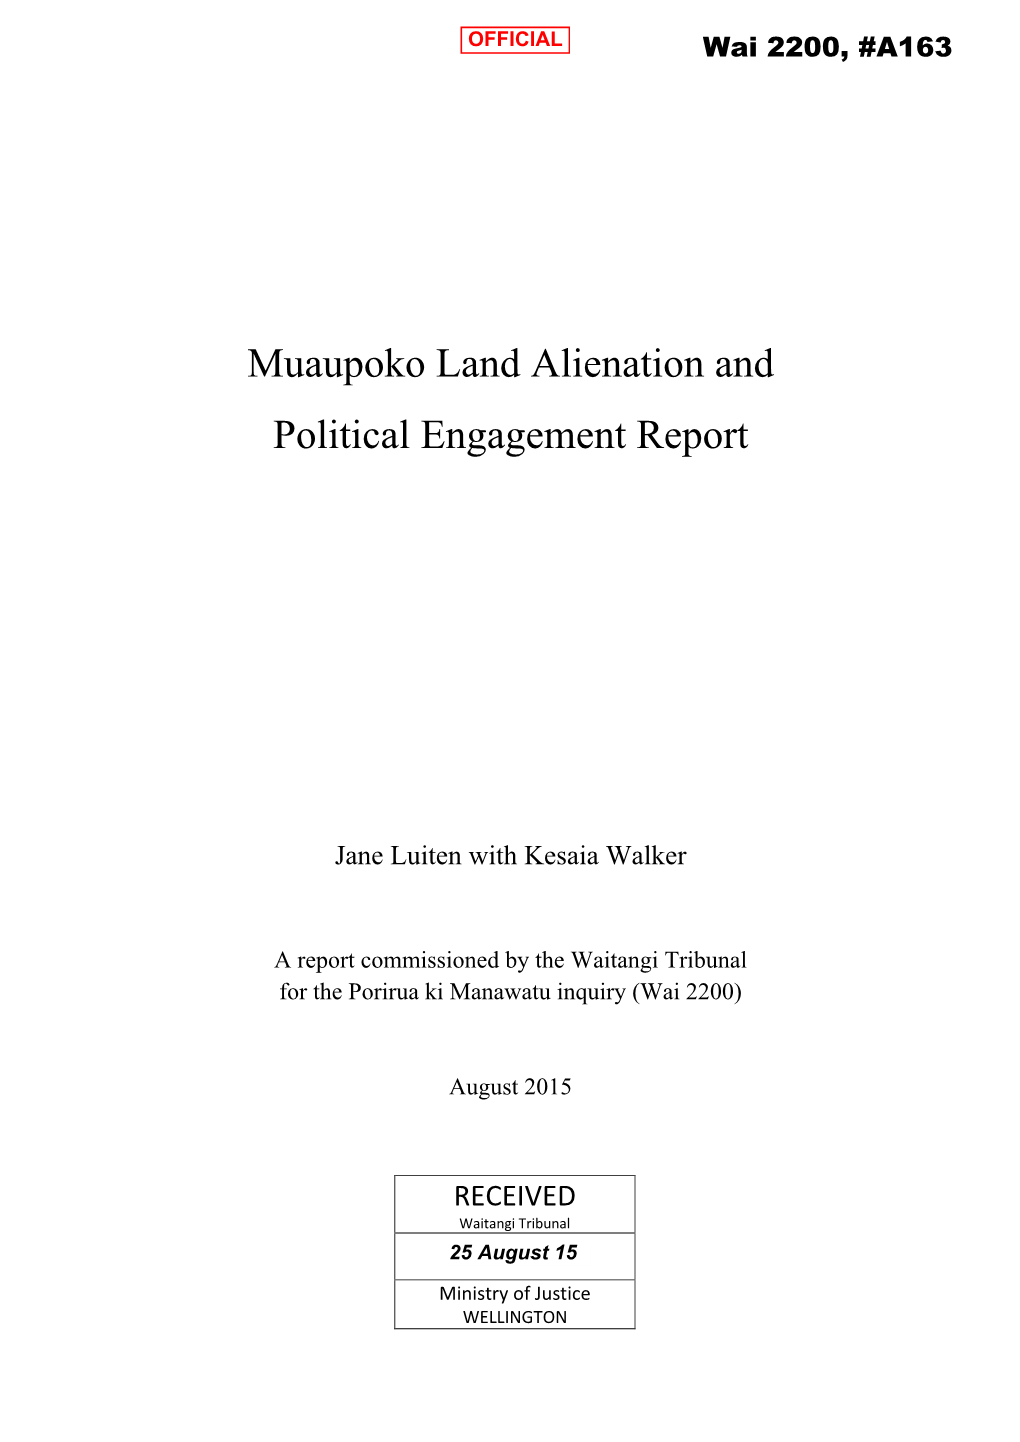 Muaupoko Land Alienation and Political Engagement Report